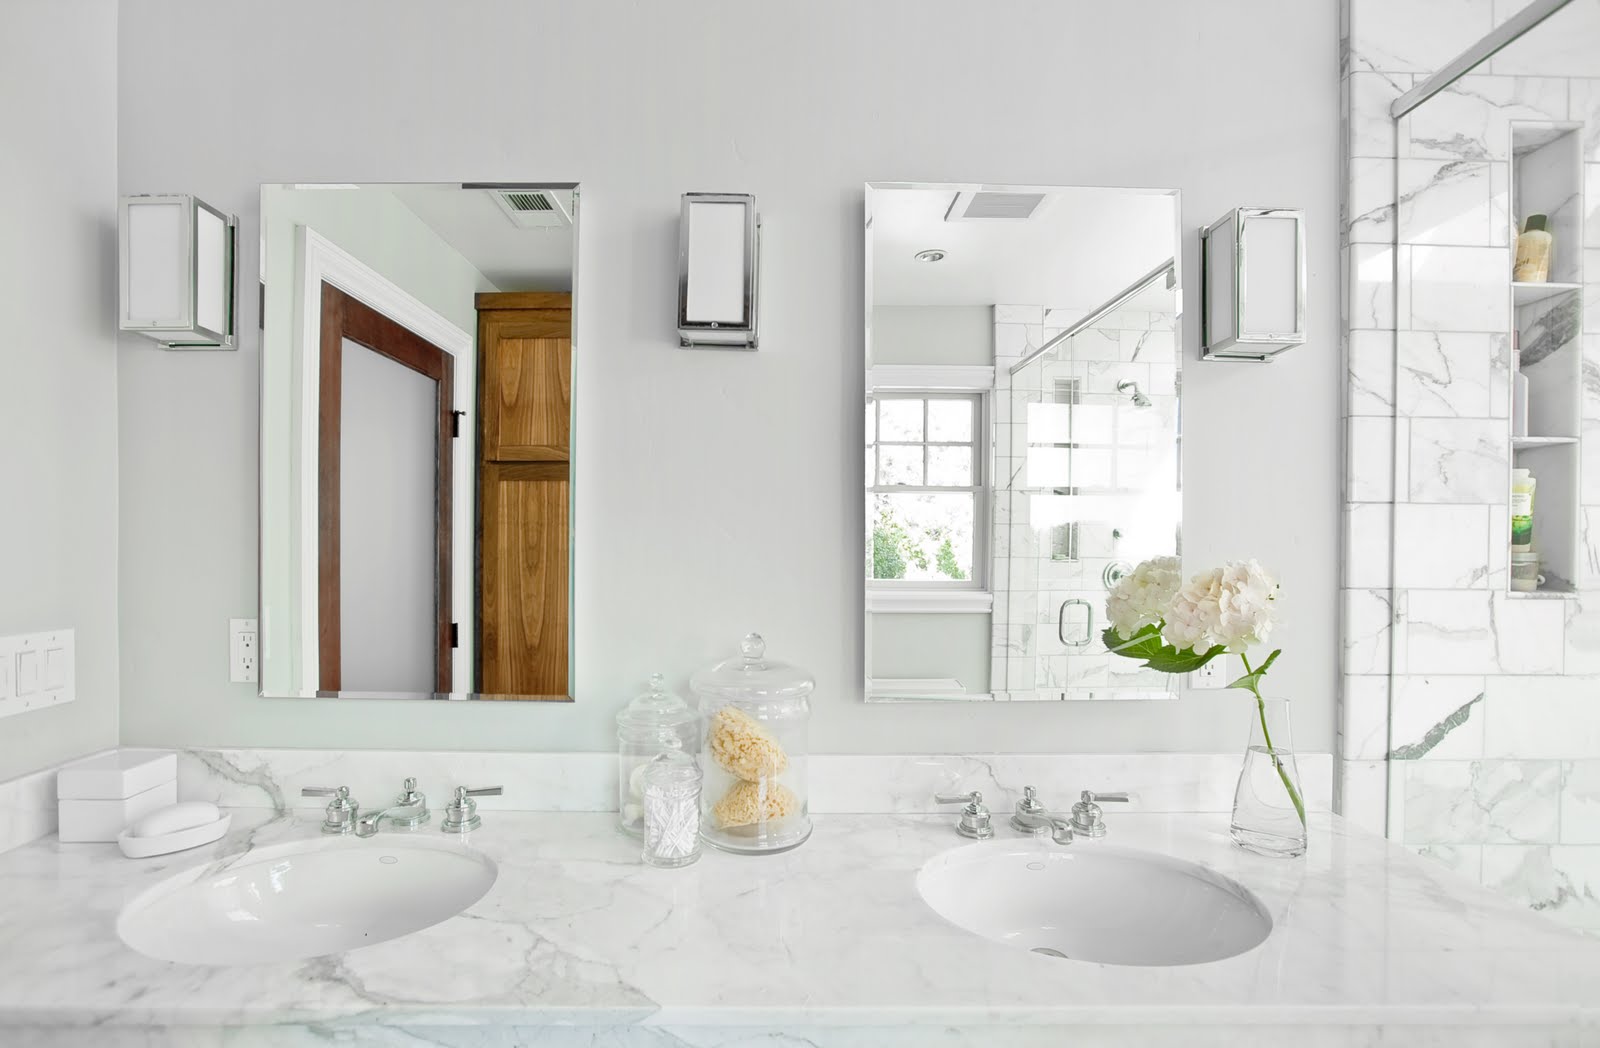 Bathroom Mng Marble And Granite Countertops